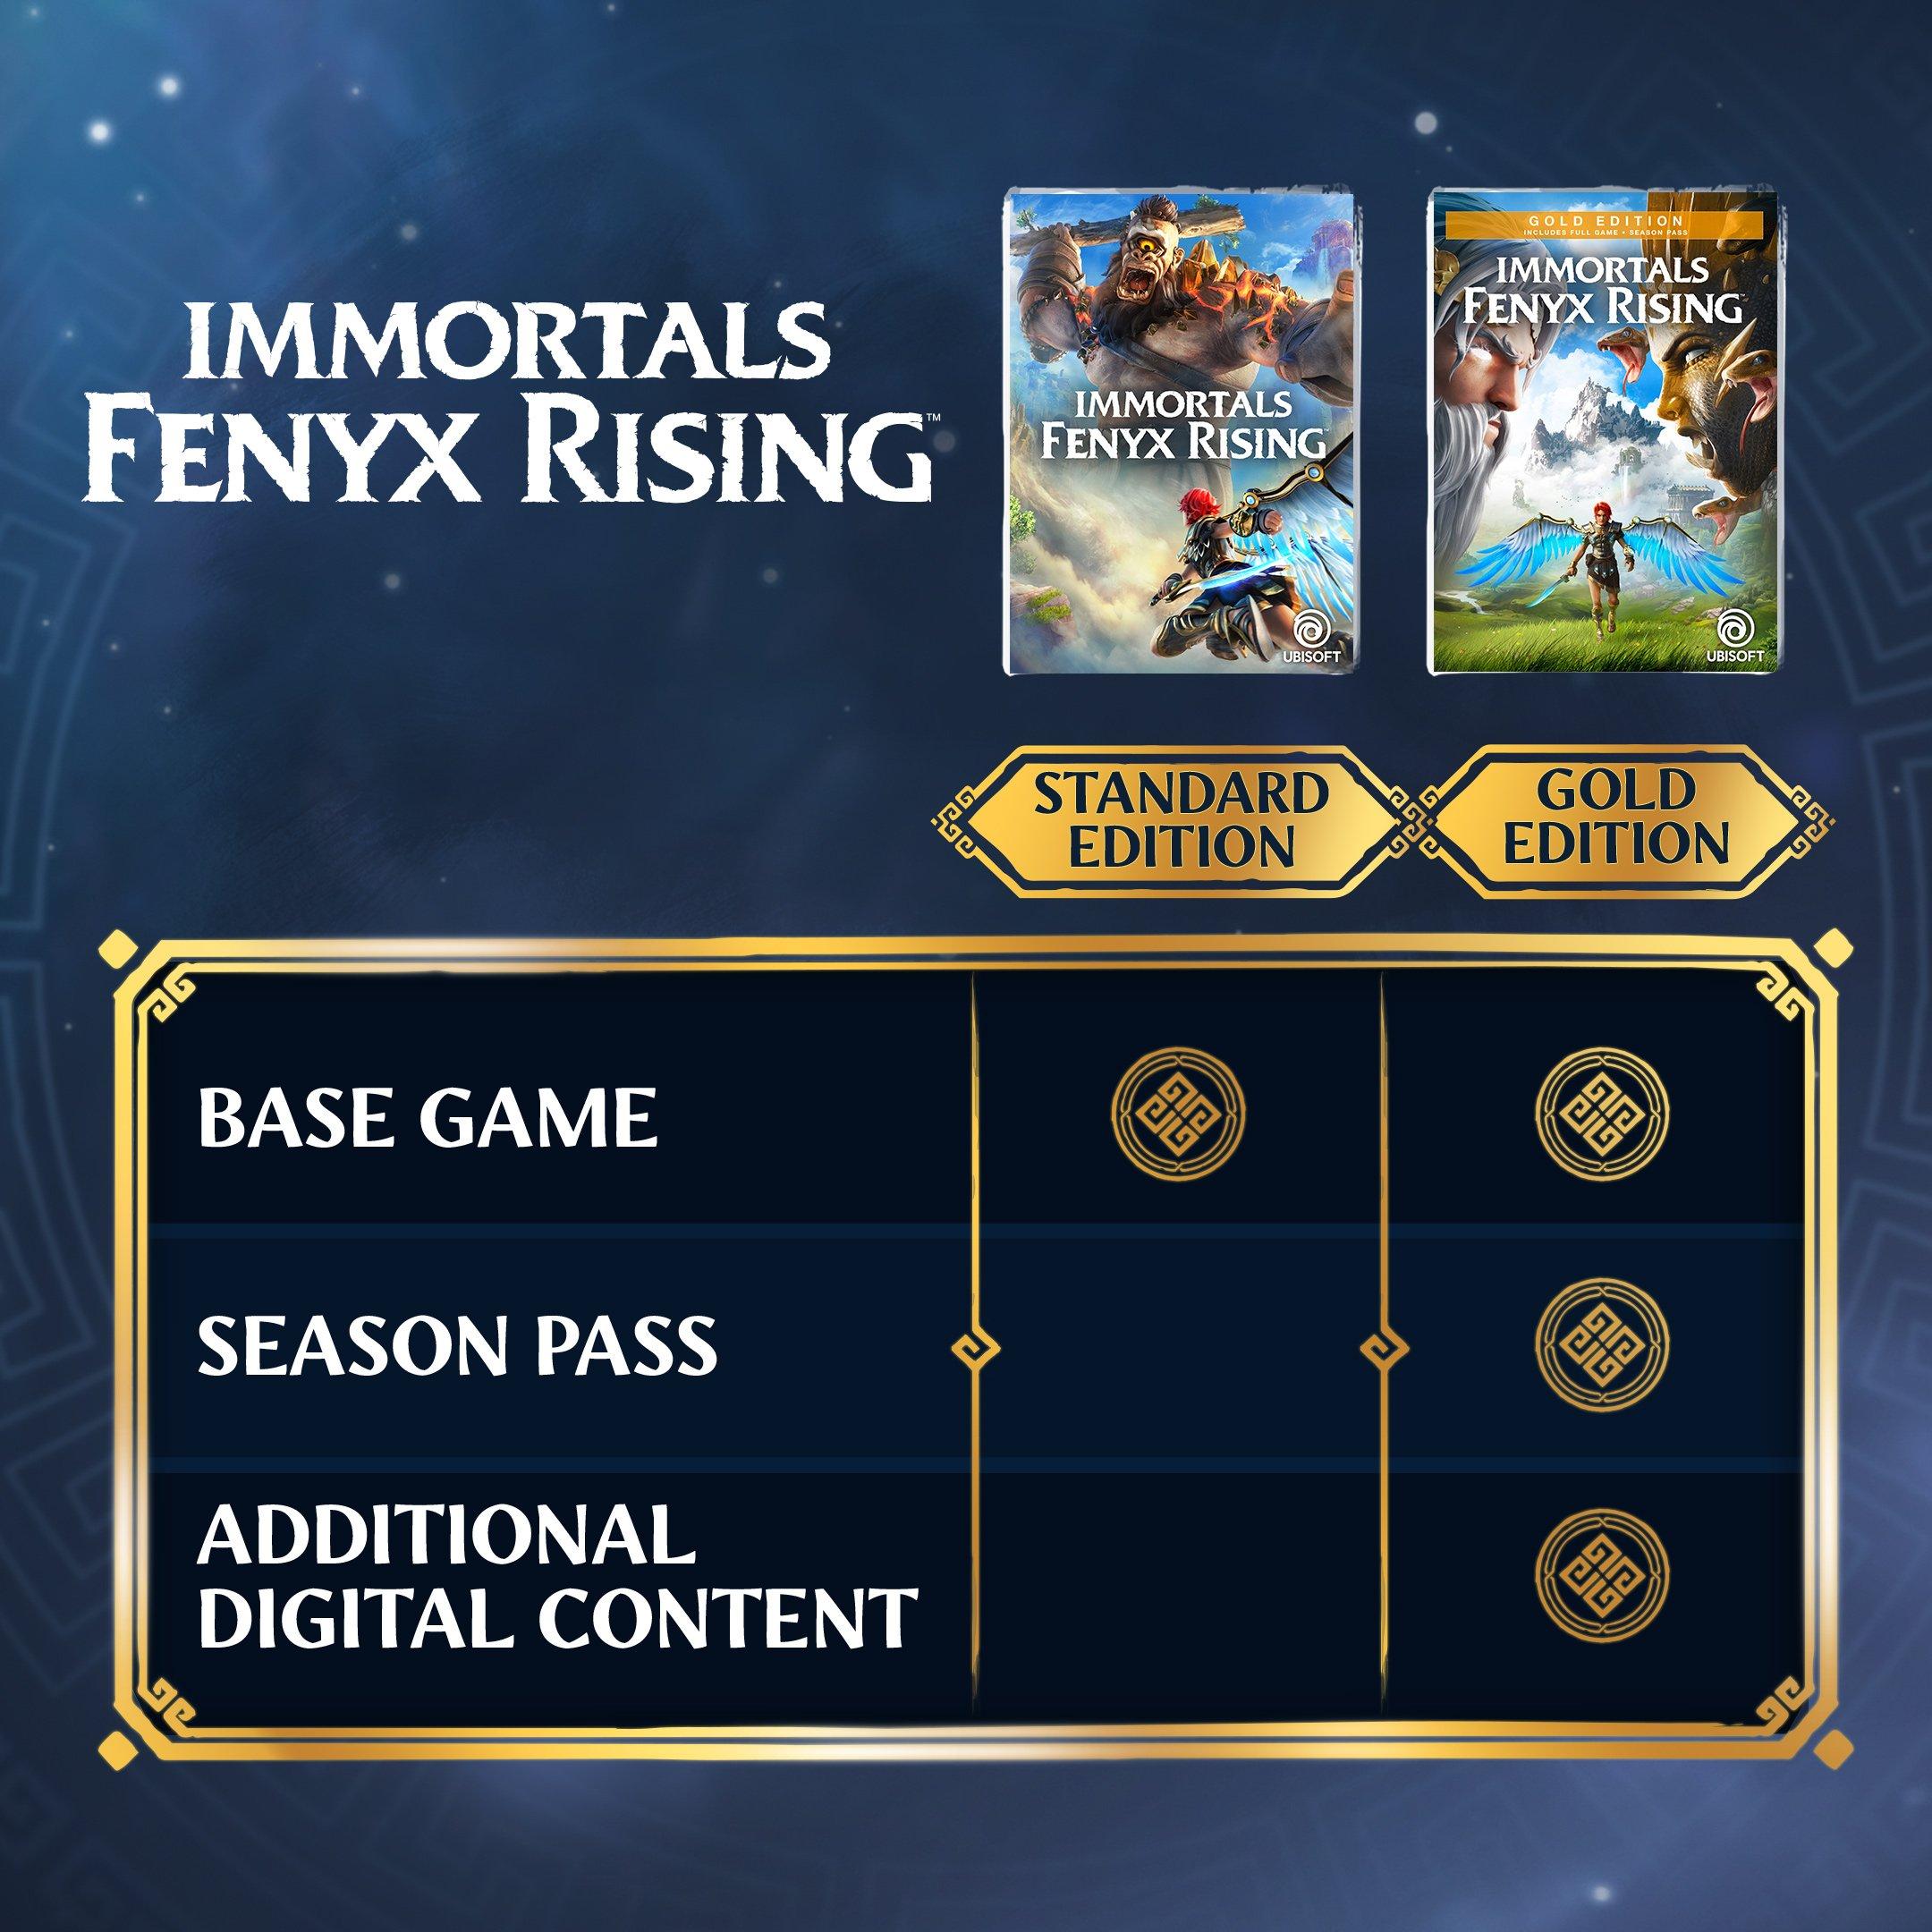 Immortals Fenyx Rising - PlayStation 4